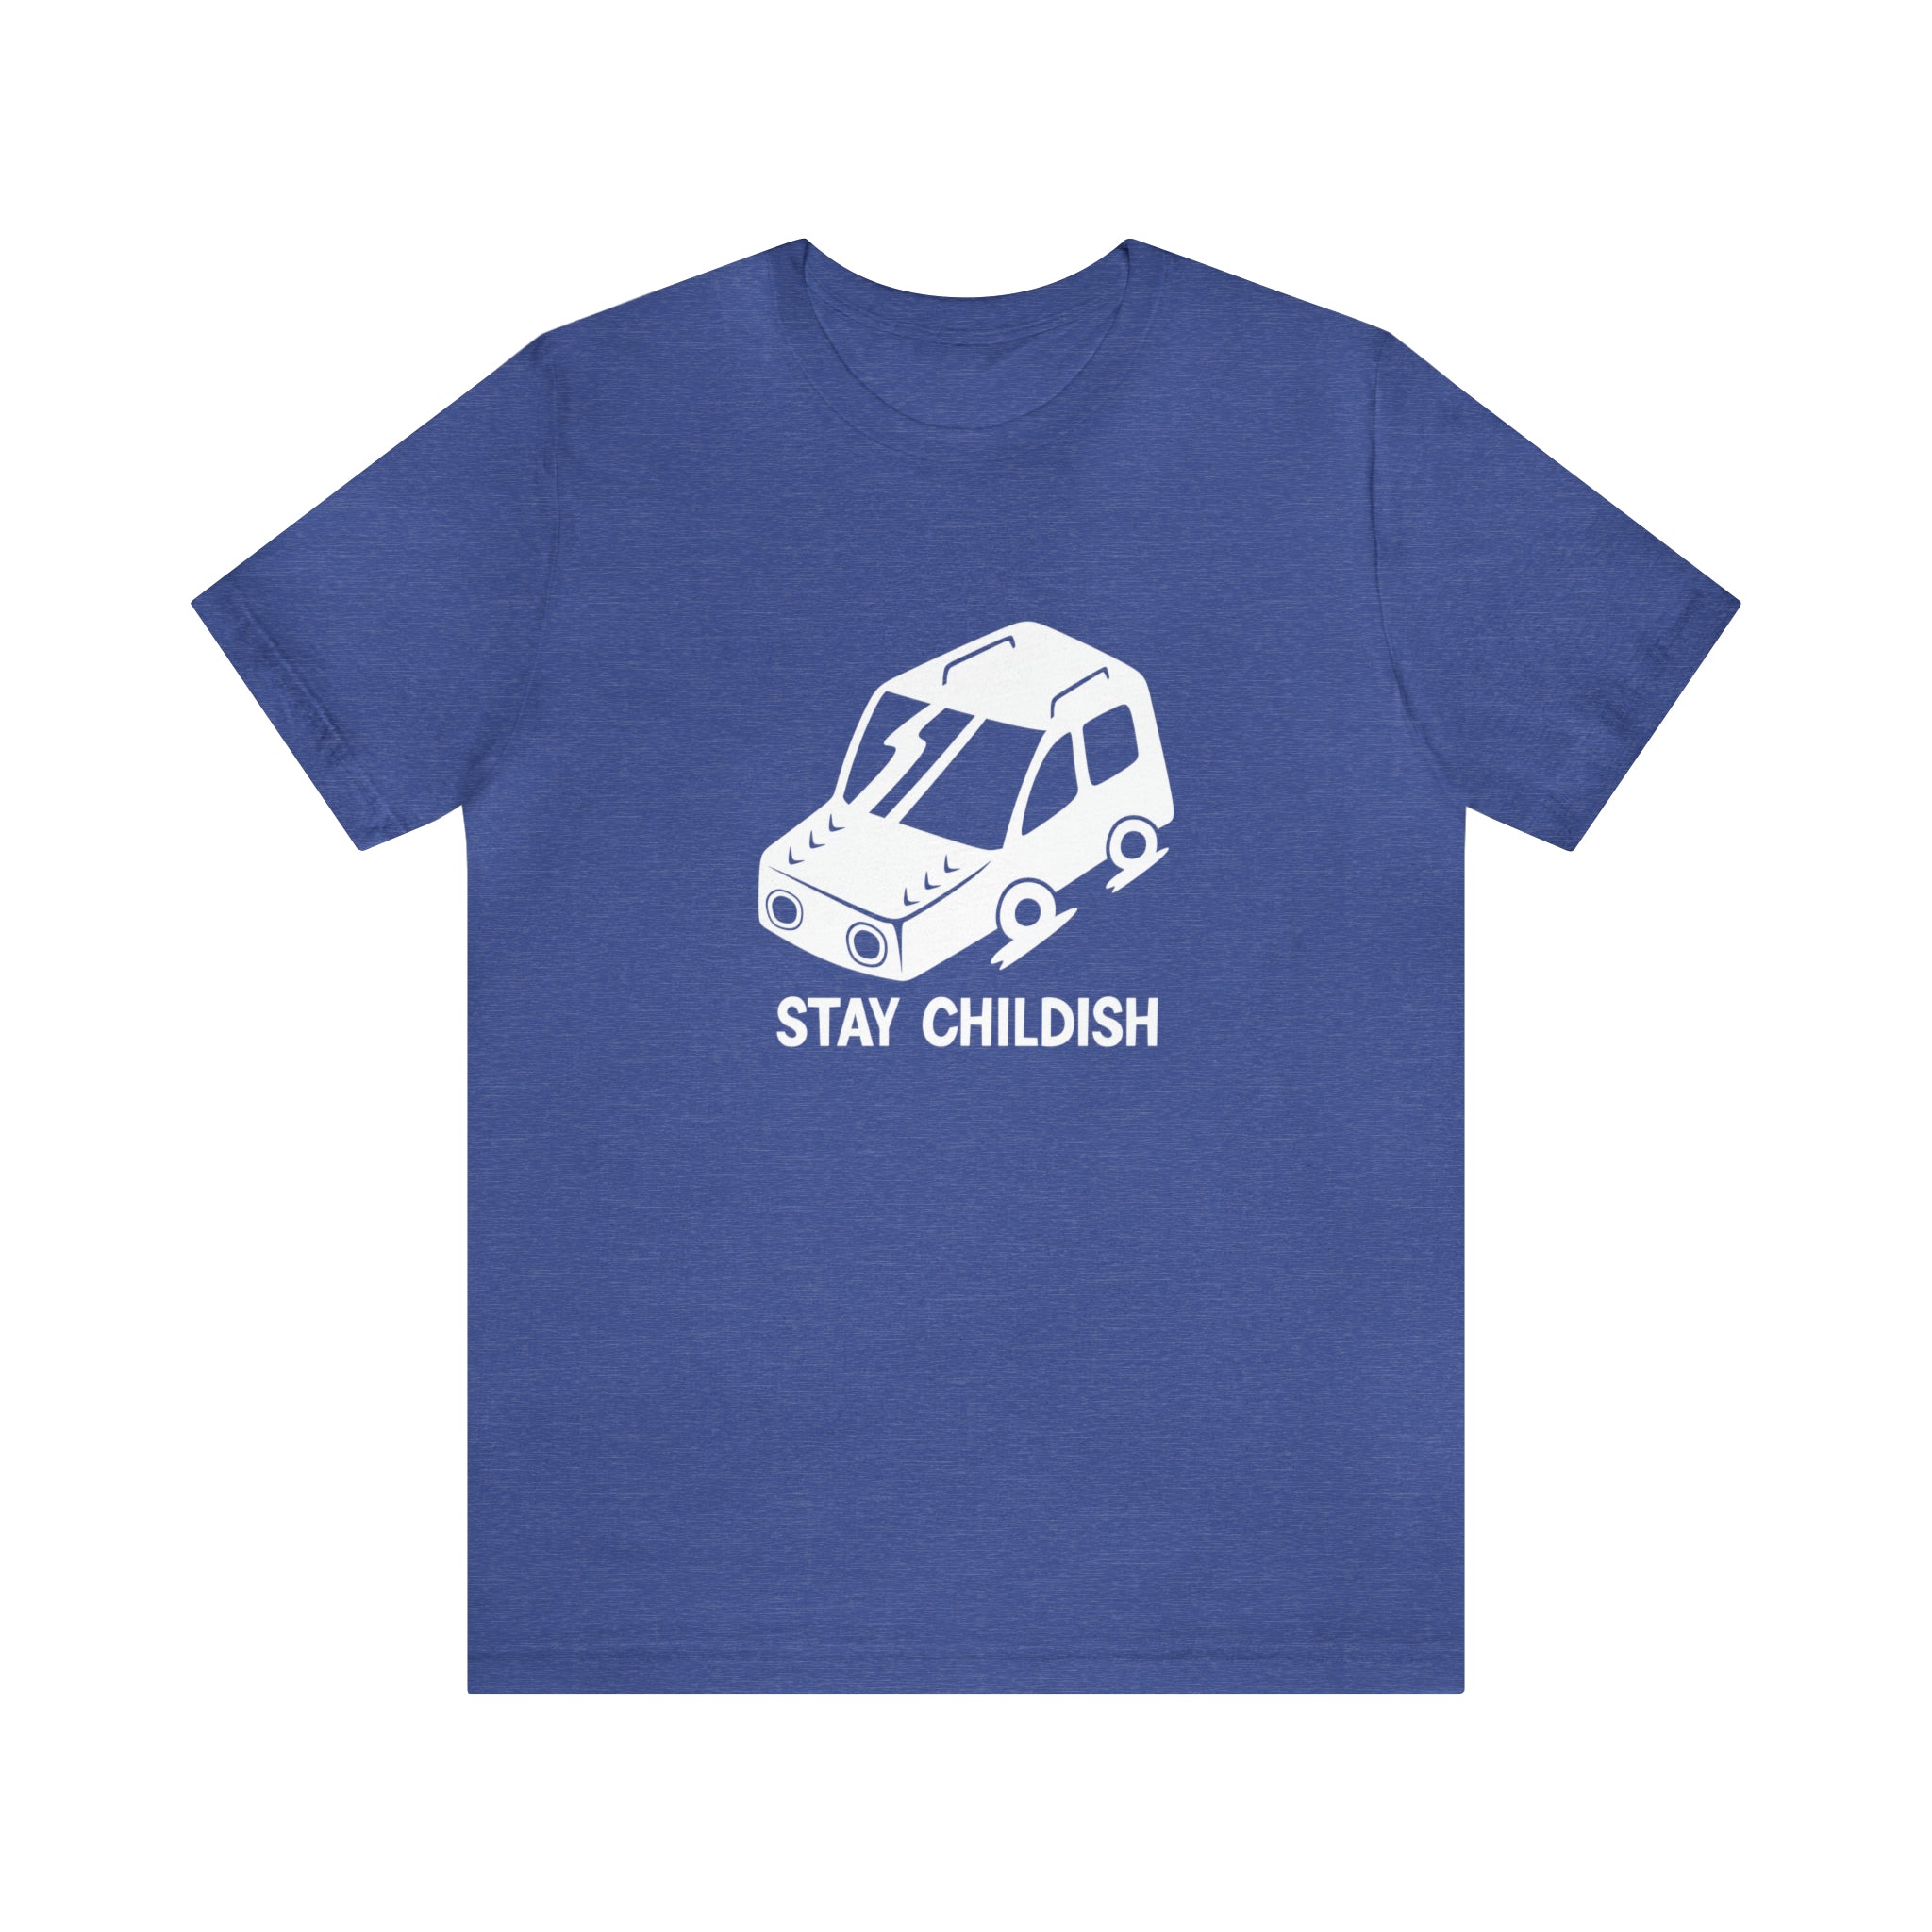 A blue Stay Childish T-Shirt.